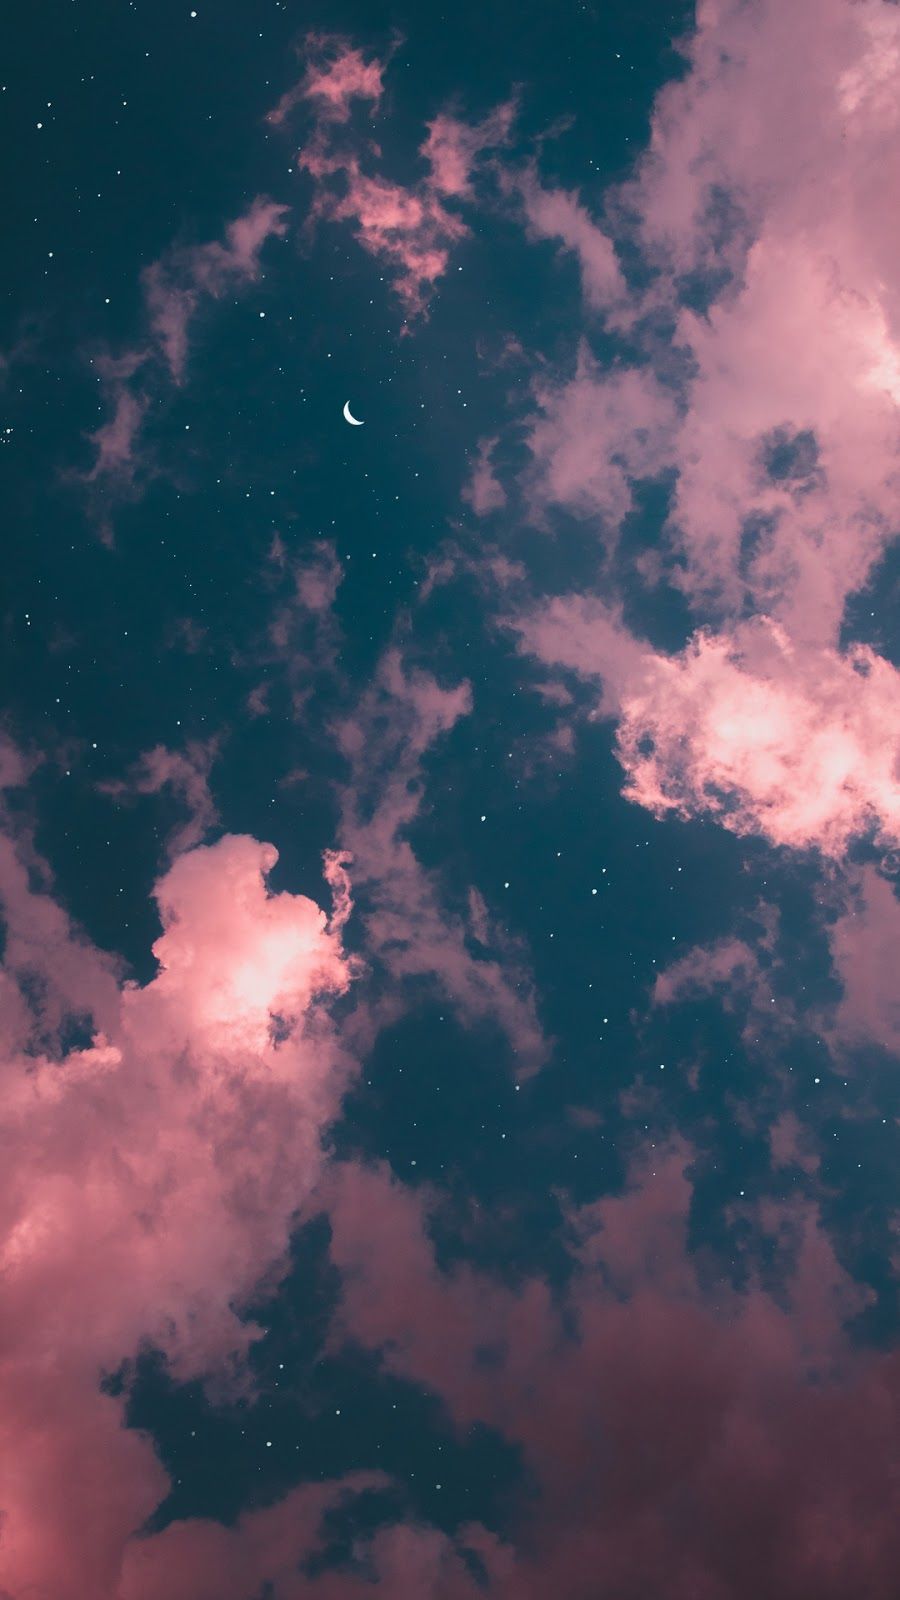 Night sky #wallpaperbackground Night sky #wallpaper #iphone